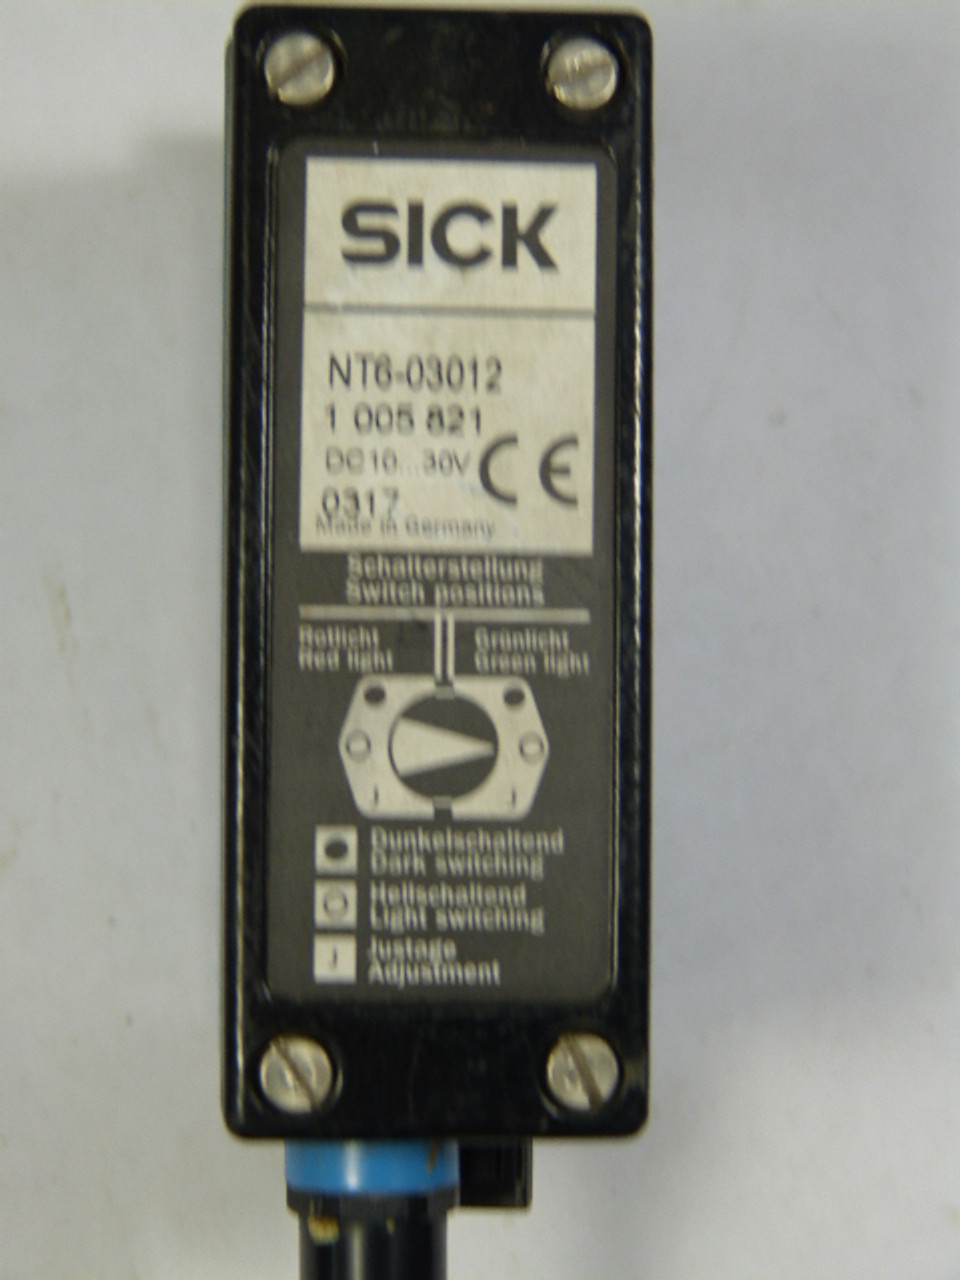 Sick NT6-03012 Contrast Sensor No Delay 1005821 USED